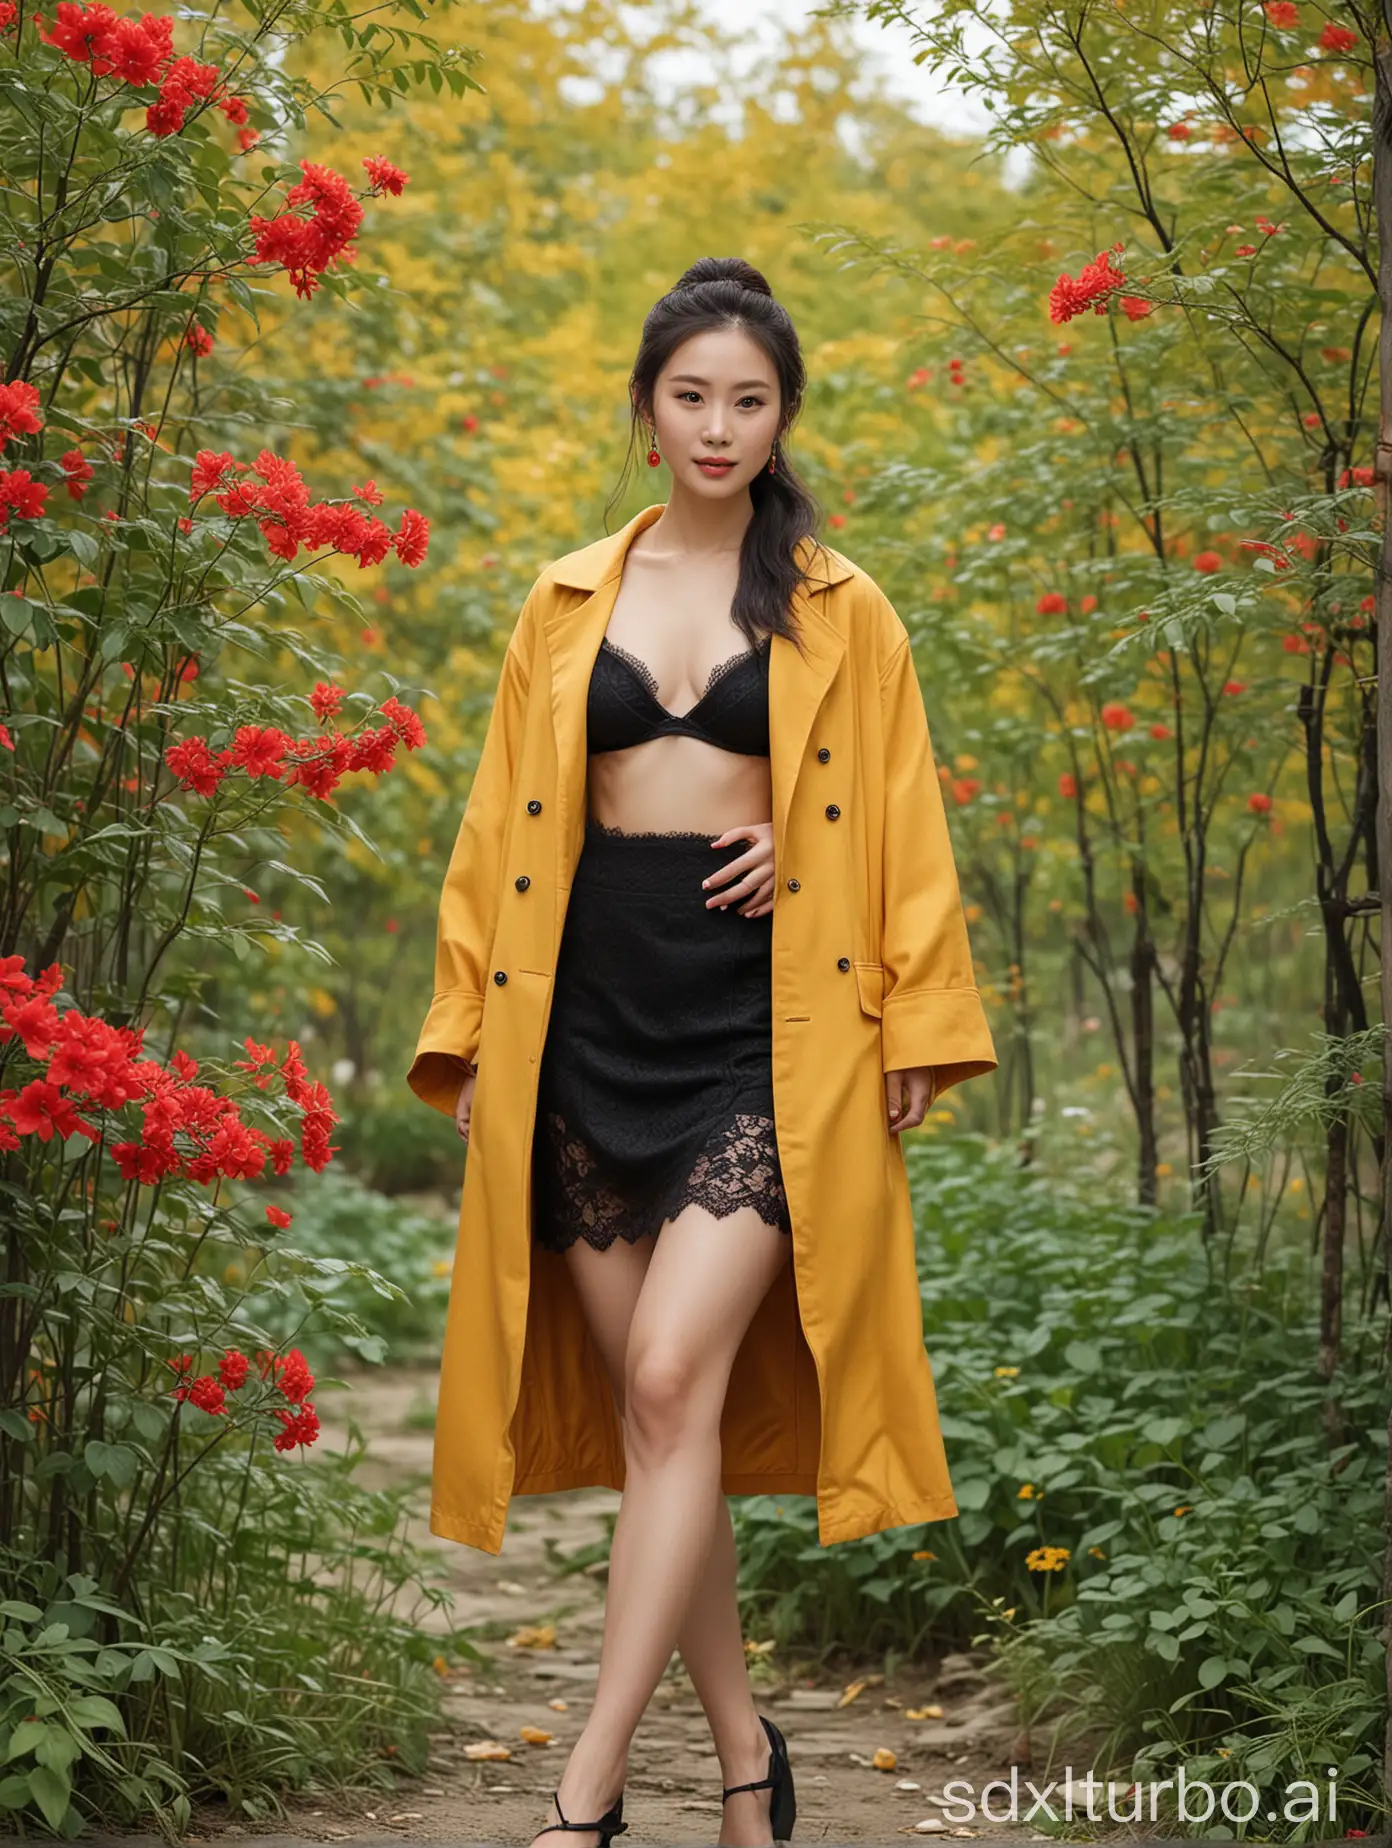 Elegant-Chinese-Woman-in-Yellow-Dress-Coat-with-Boyfriend-by-Sedan-in-Lush-Garden